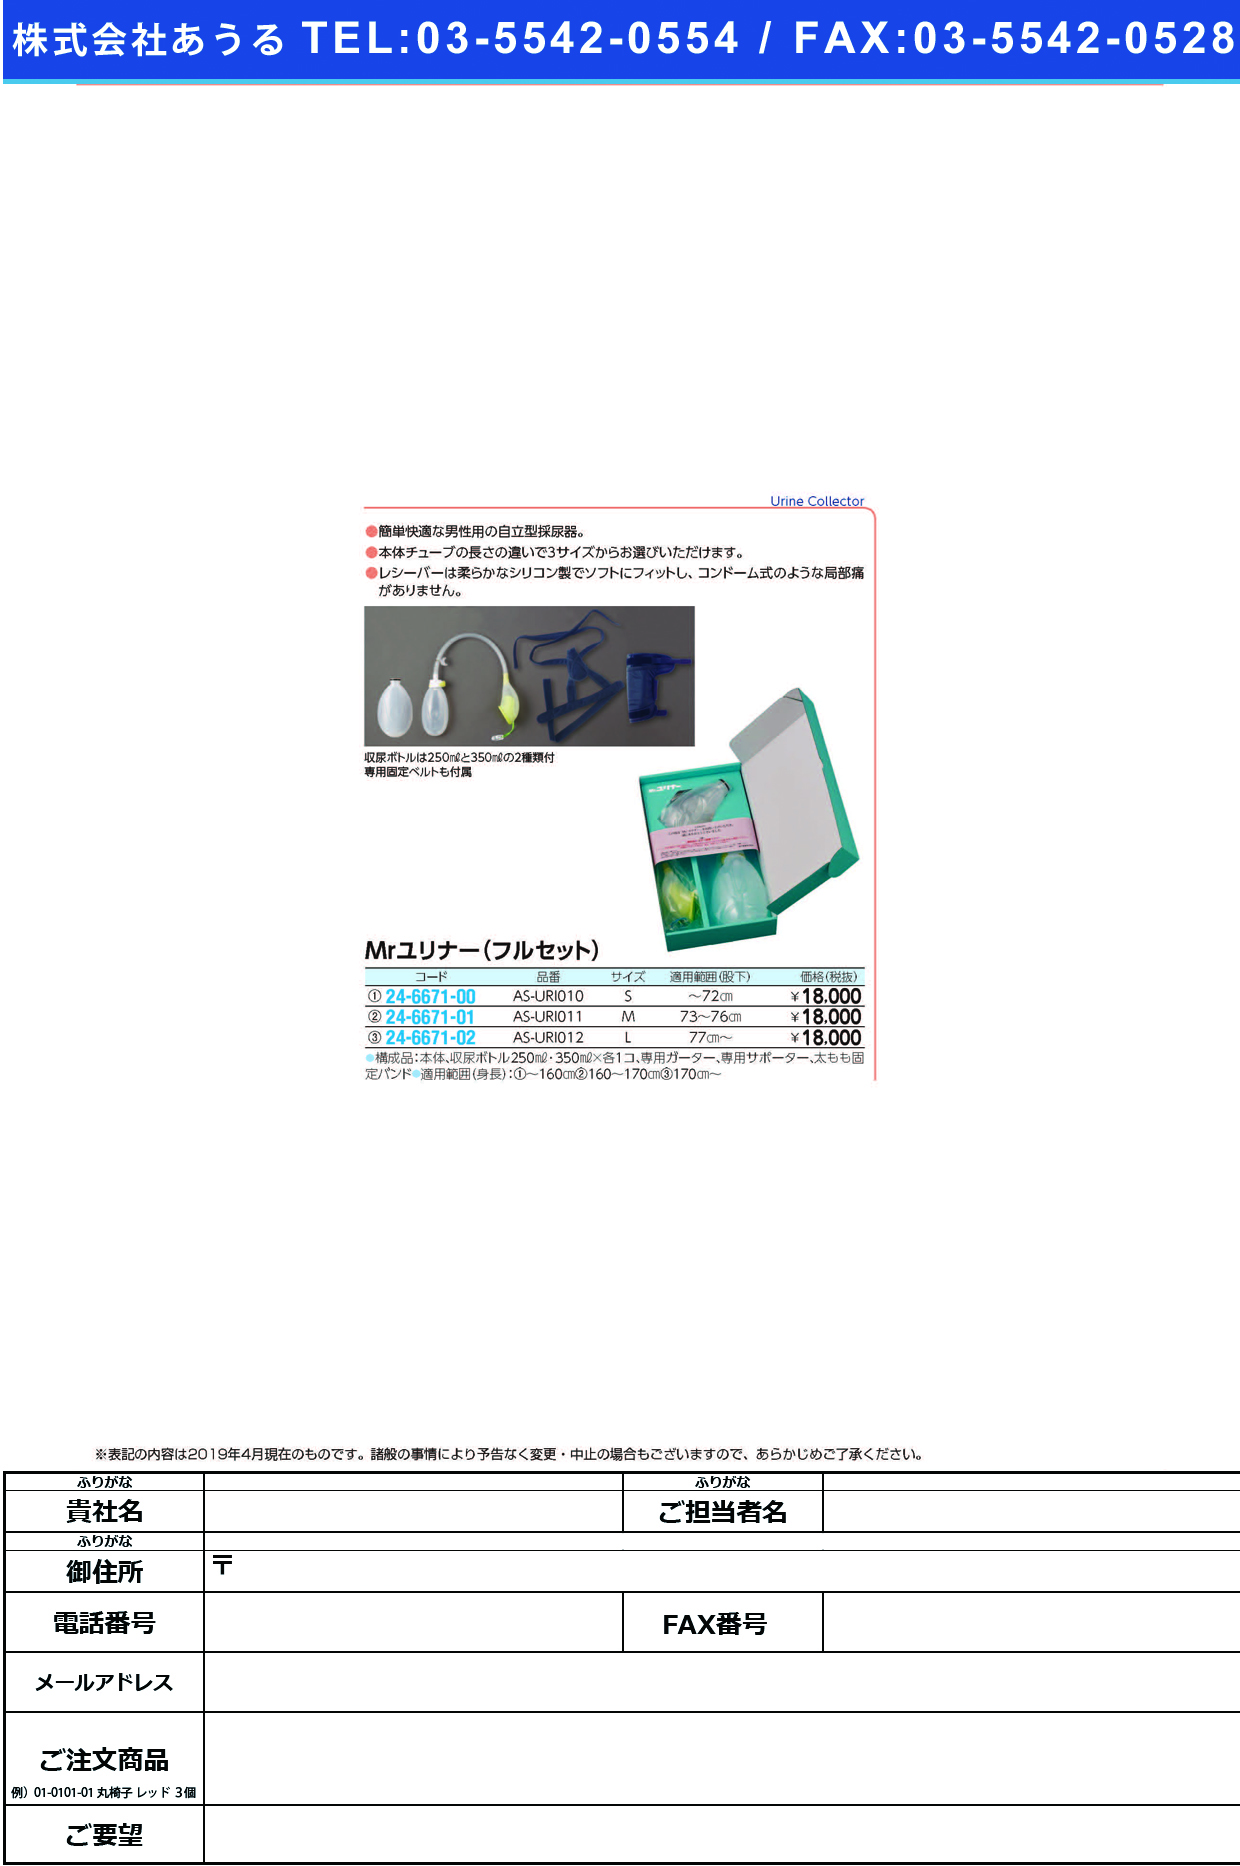 (24-6671-01)Ｍｒユリナー（専用ガーターセット）Ｍ MR-URI011 MRﾕﾘﾅｰ(ｶﾞｰﾀｰｾｯﾄ)M【1組単位】【2019年カタログ商品】